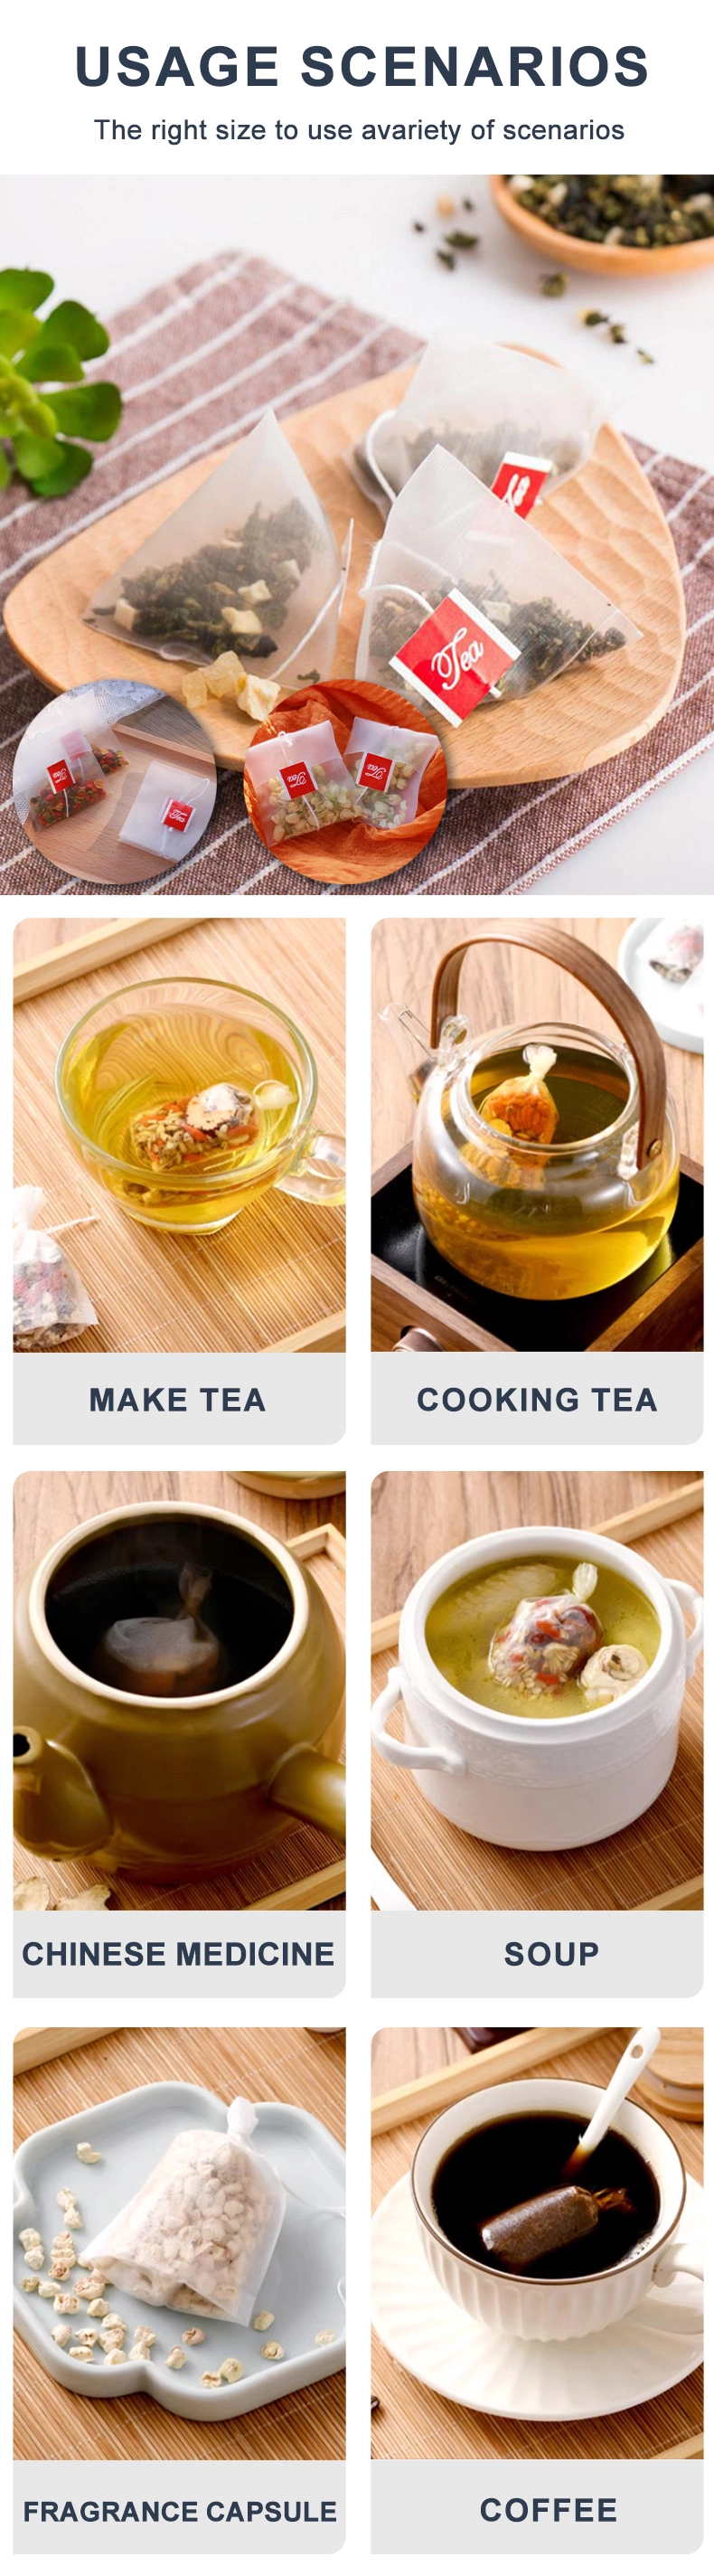 PLA Nylon Corn Fiber Customize Empty Tea Bag Pyramid for Loose Tea